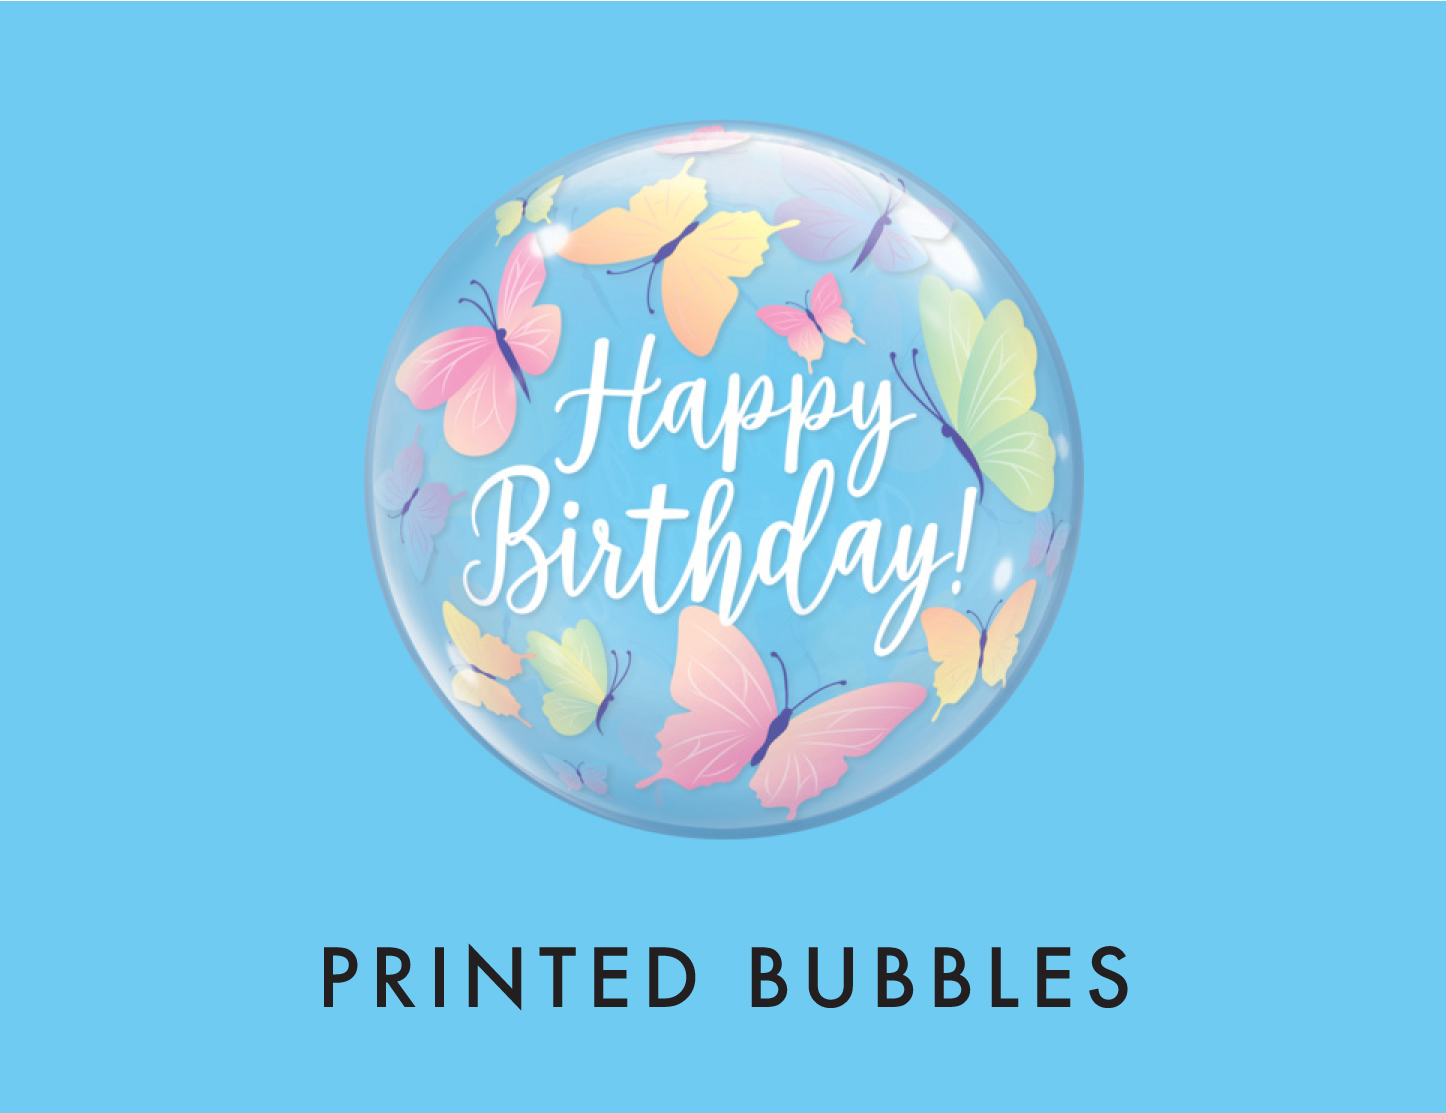 Printed Bubbles